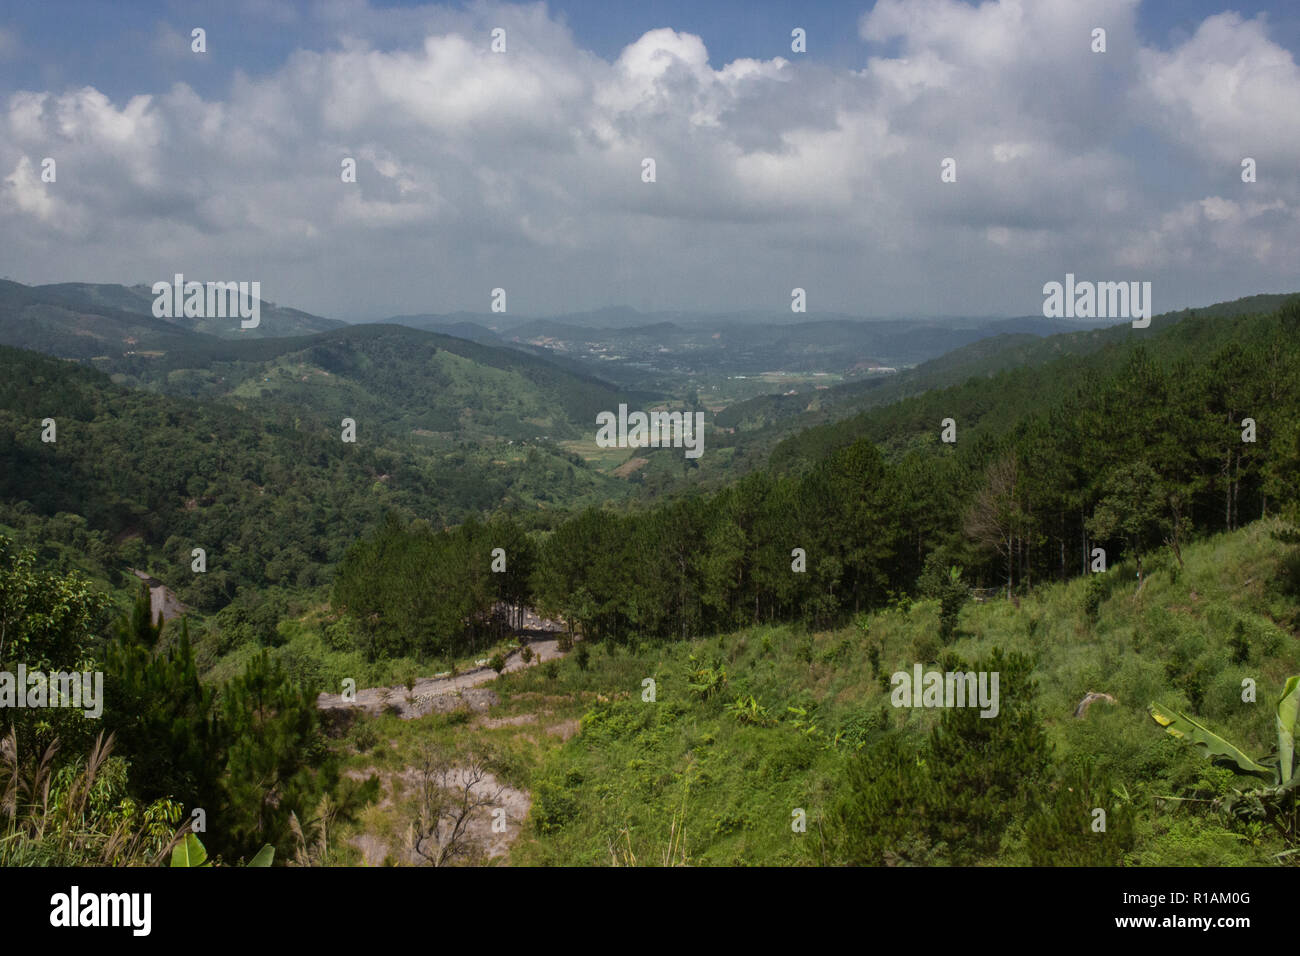 panorama of a mountain valley at dalat vietnam Stock Photo